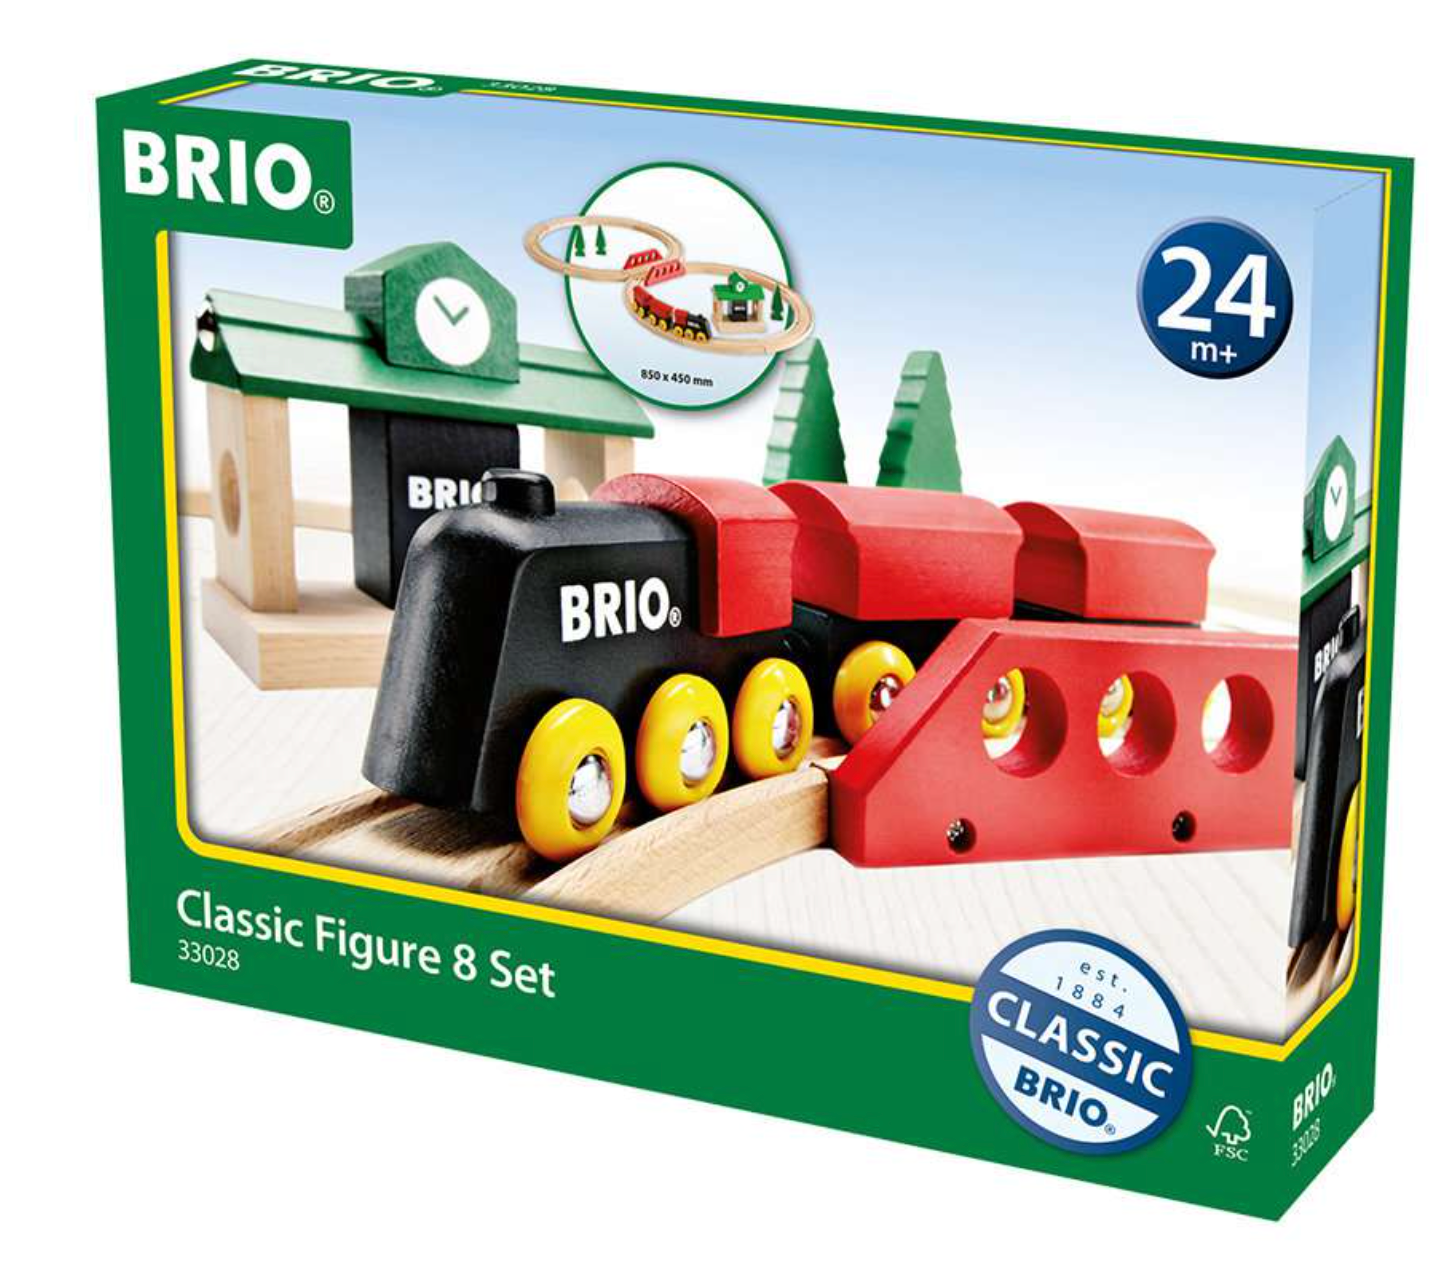 BRIO World Classic Figure 8 set